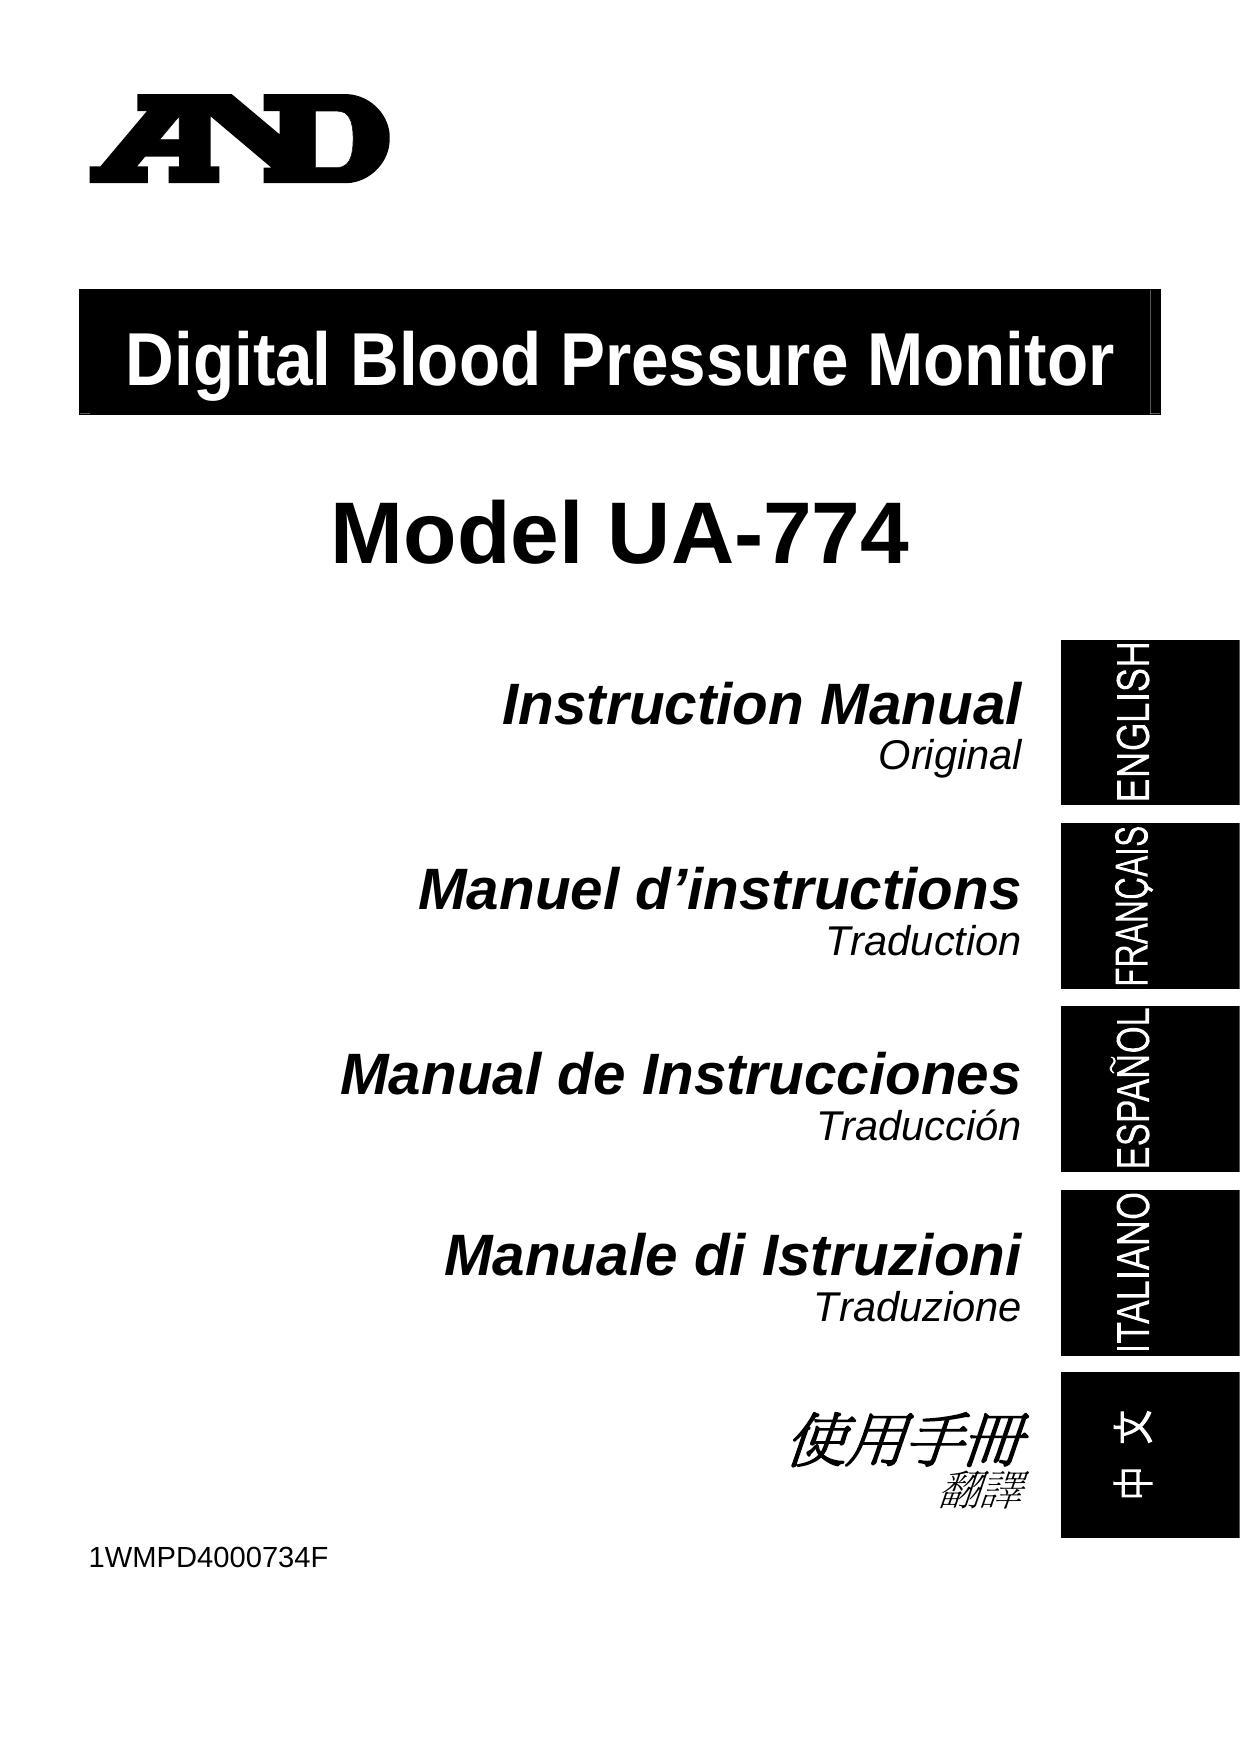 ad-digital-blood-pressure-monitor-model-ua-774-instruction-manual.pdf